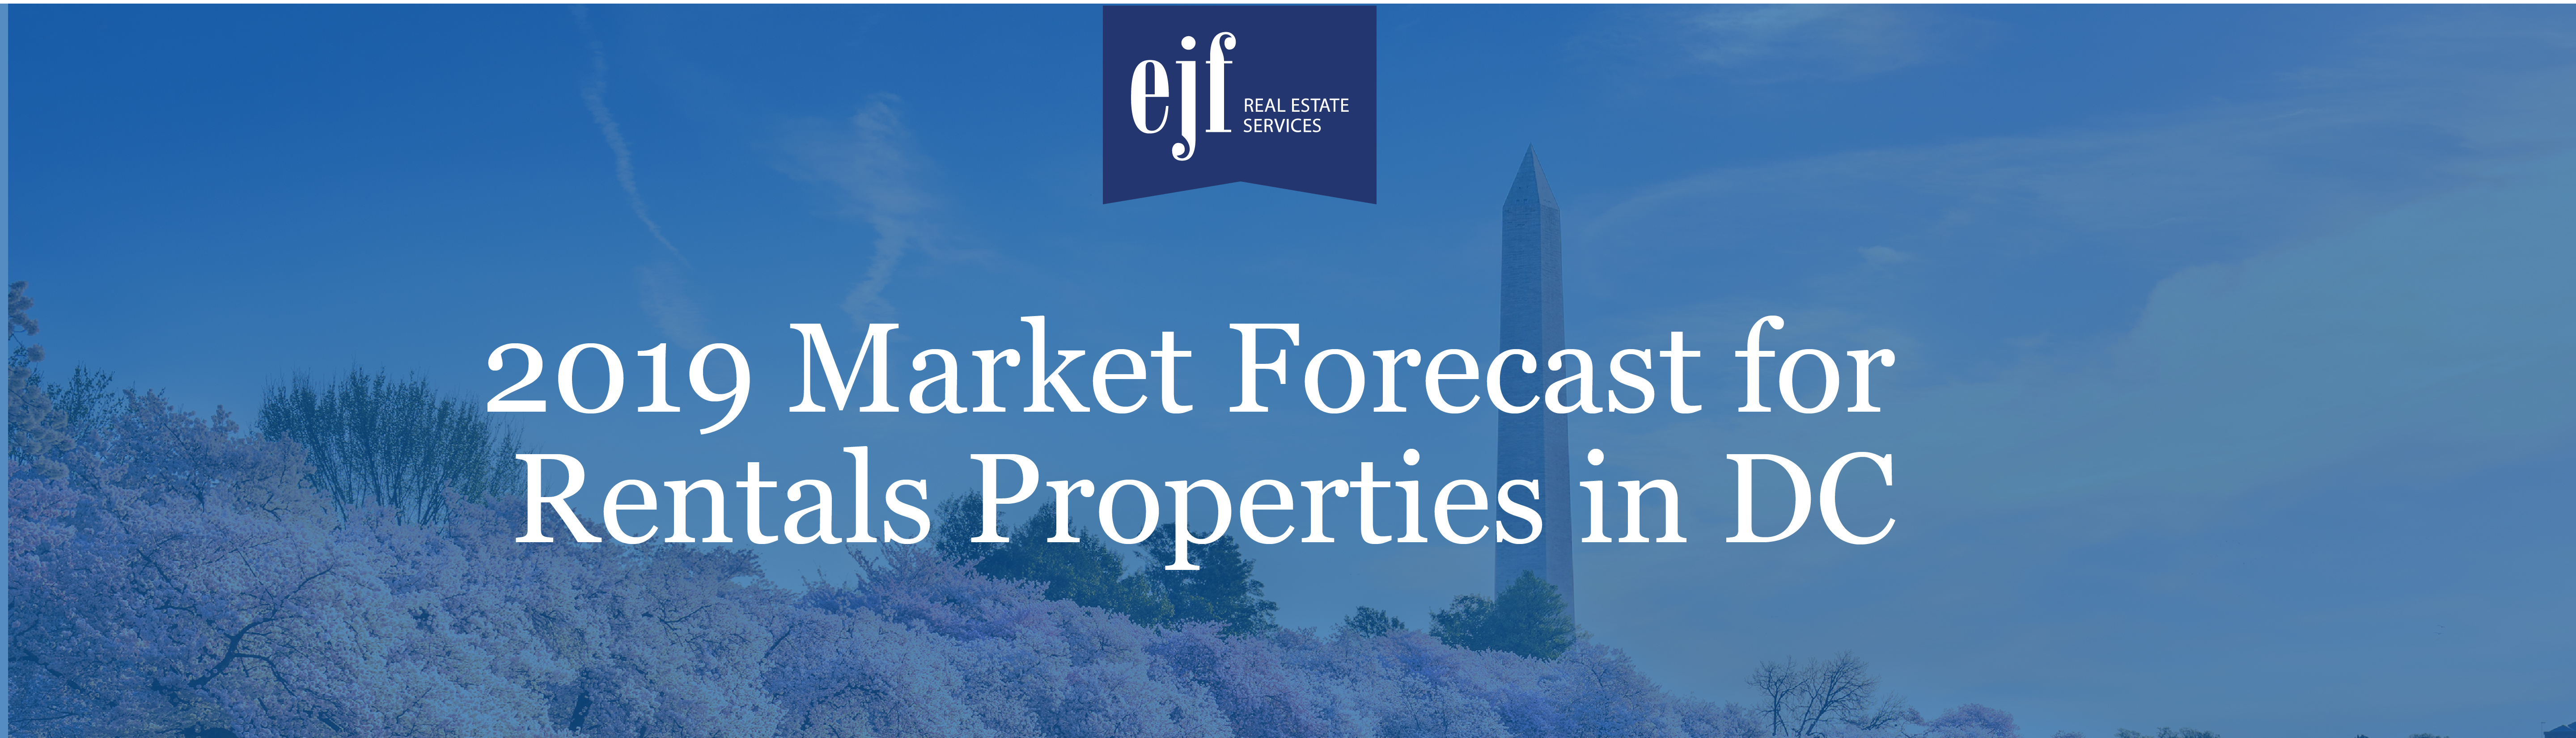 2019 Market Forecast for Rentals Properties in DC